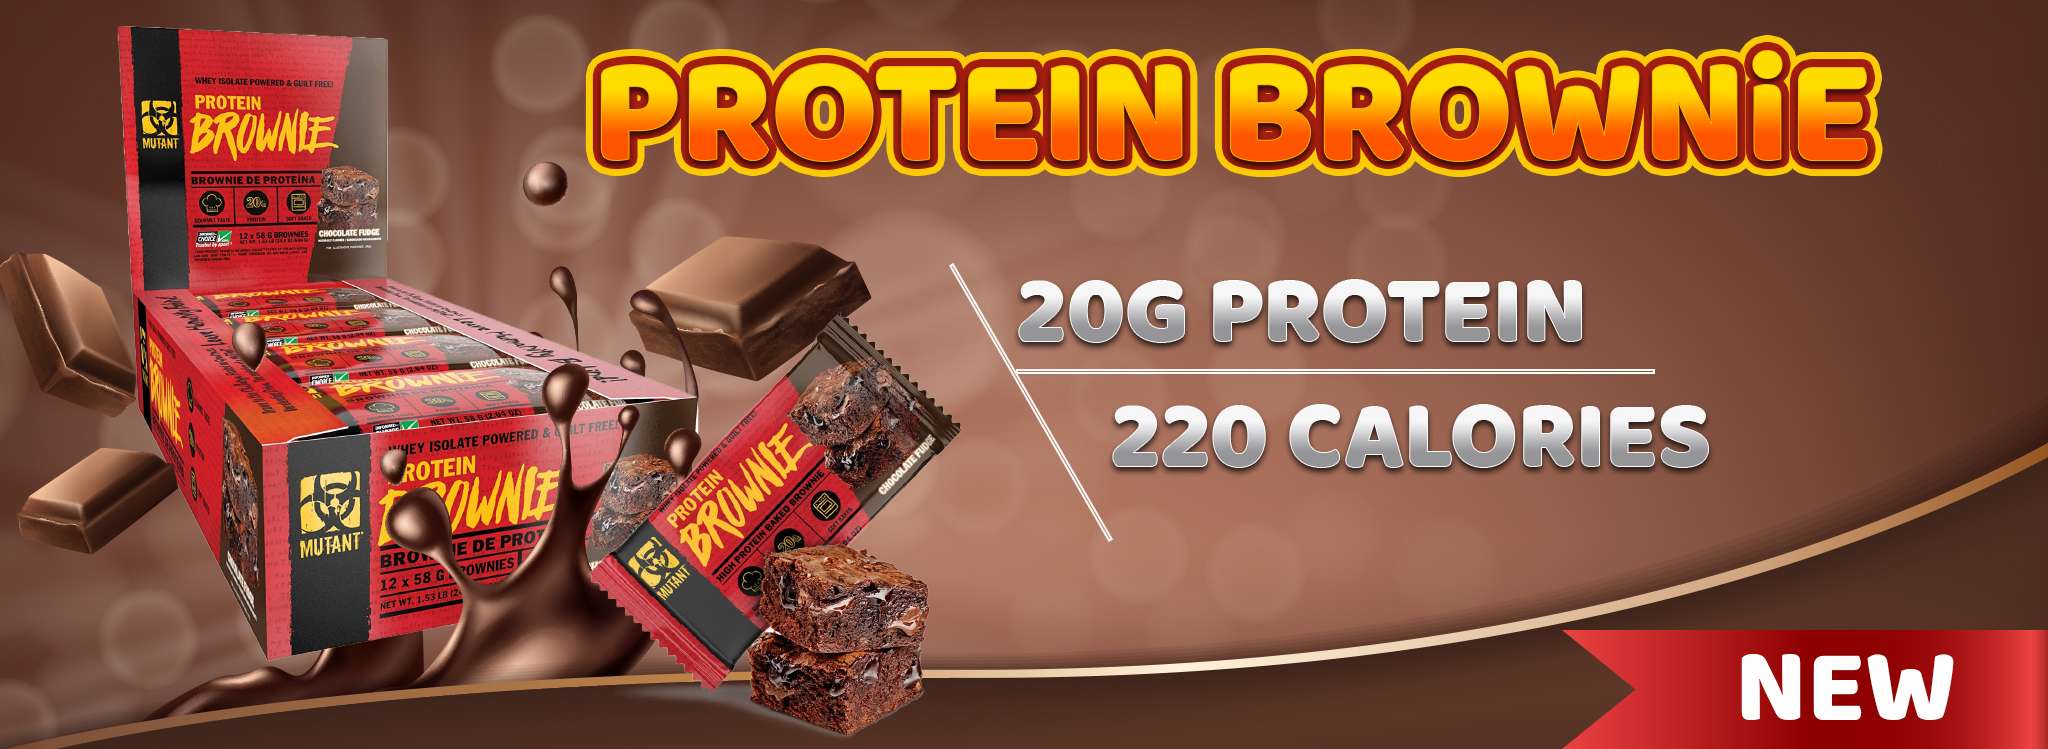 mutant protein brownie gia re ha noi tphcm